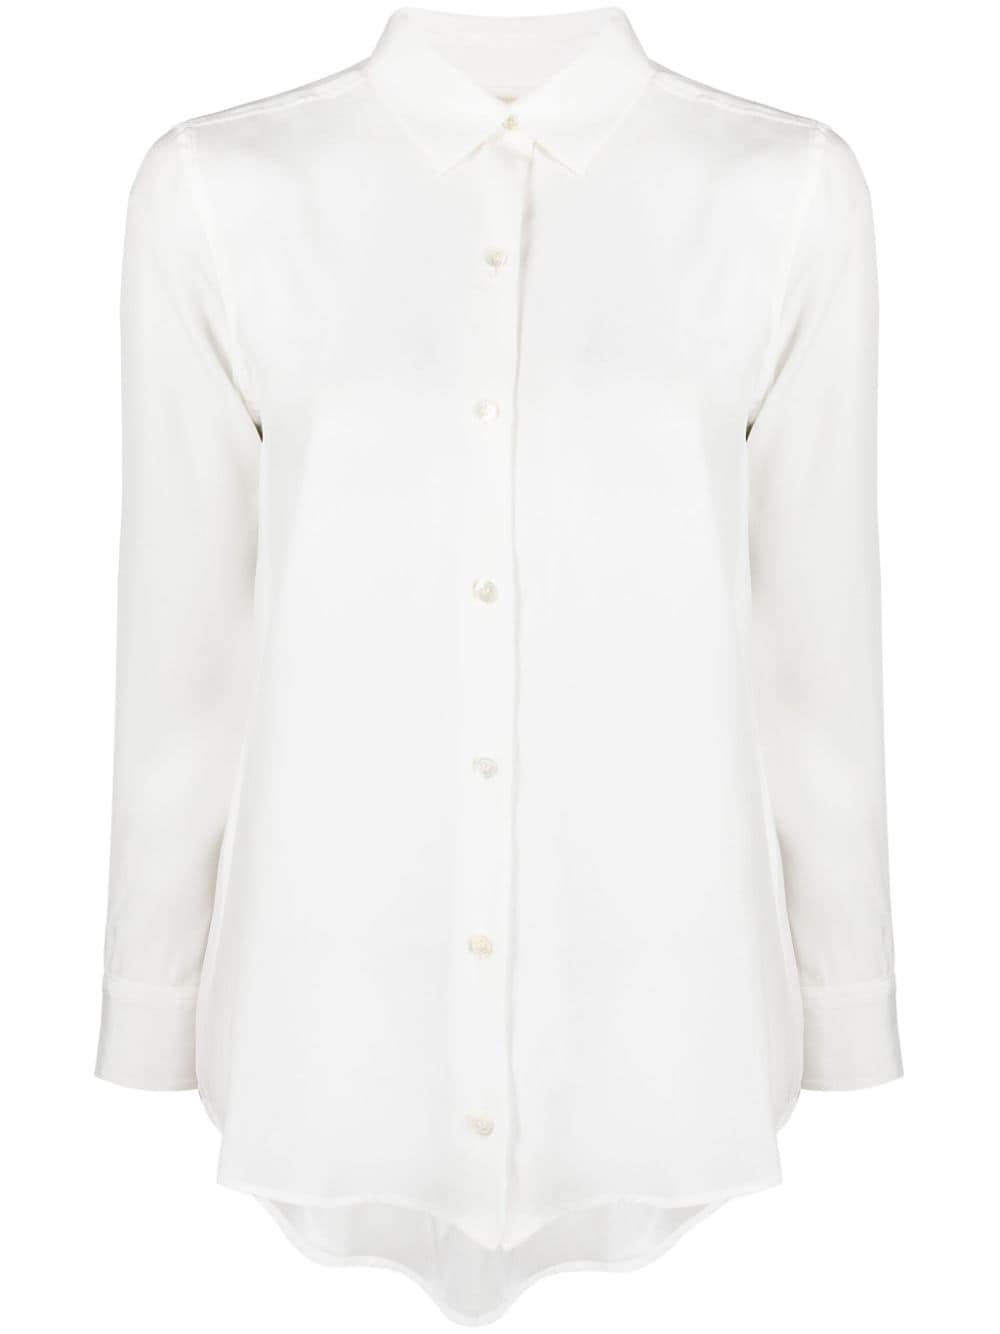 PAULA Sonia silk shirt - White